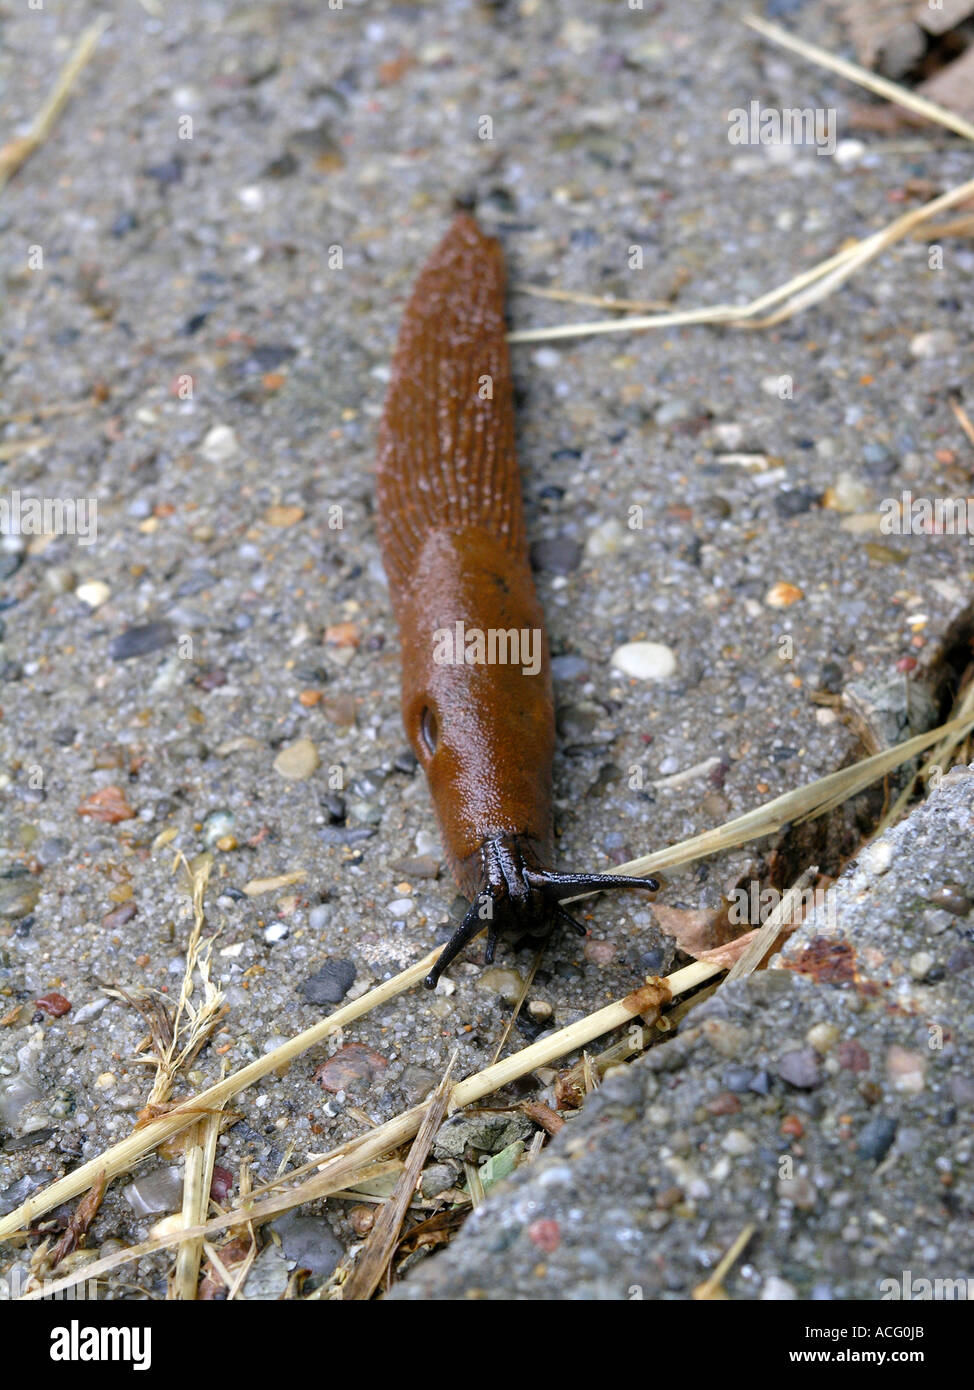 Arion lusitanicus spanish slug Stock Photo